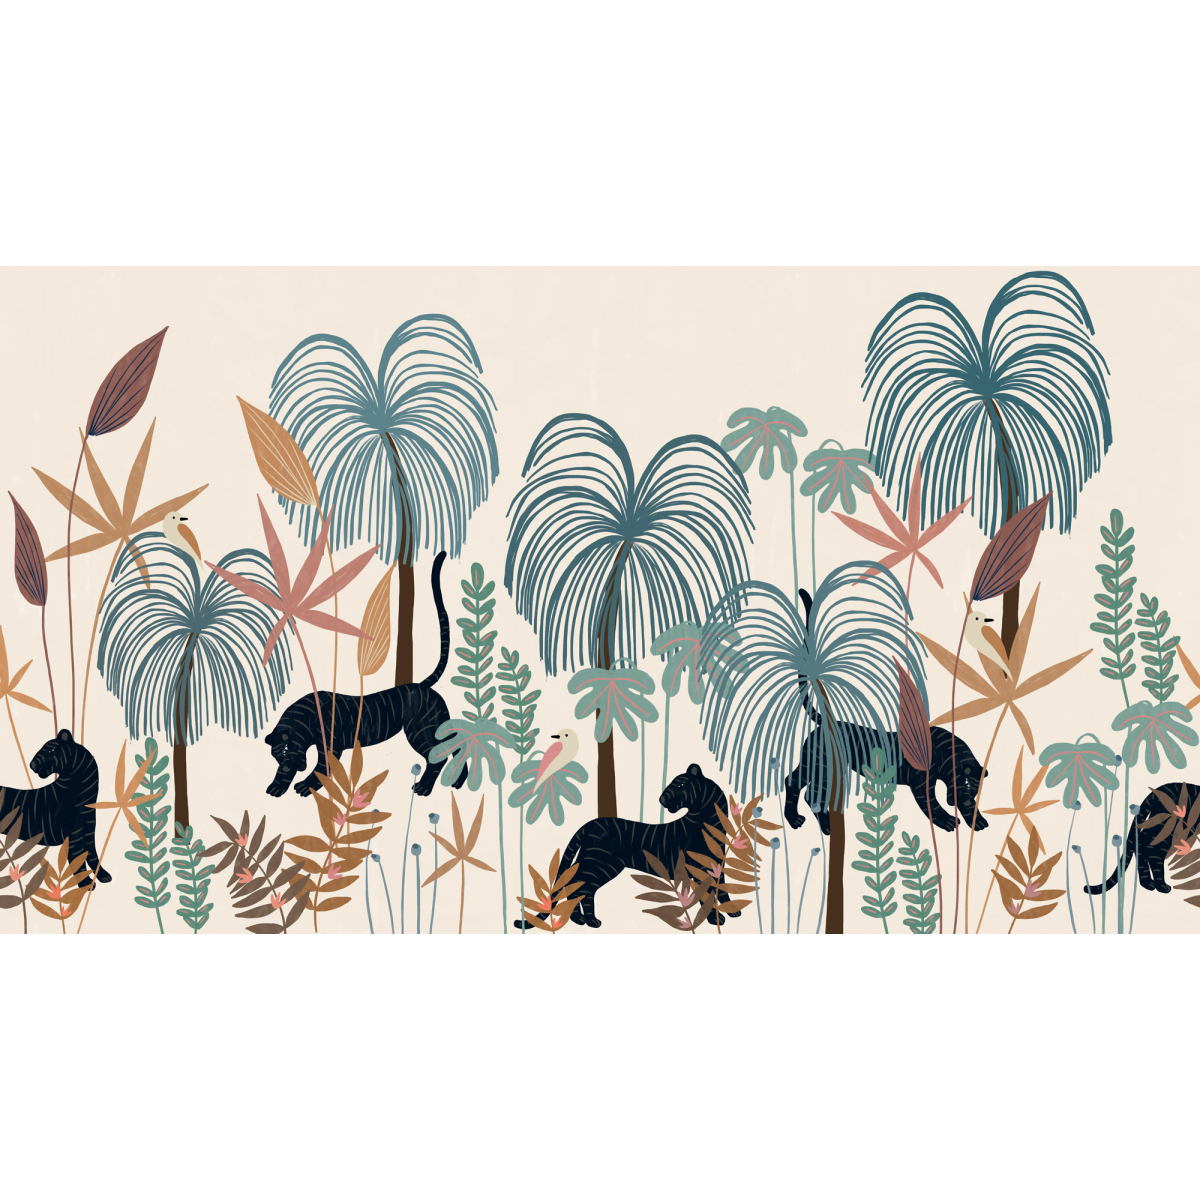 Panorama-Vliestapete Dschungel mit Tigern Farben - Kollektion Zoé Jiquel - Acte-Deco